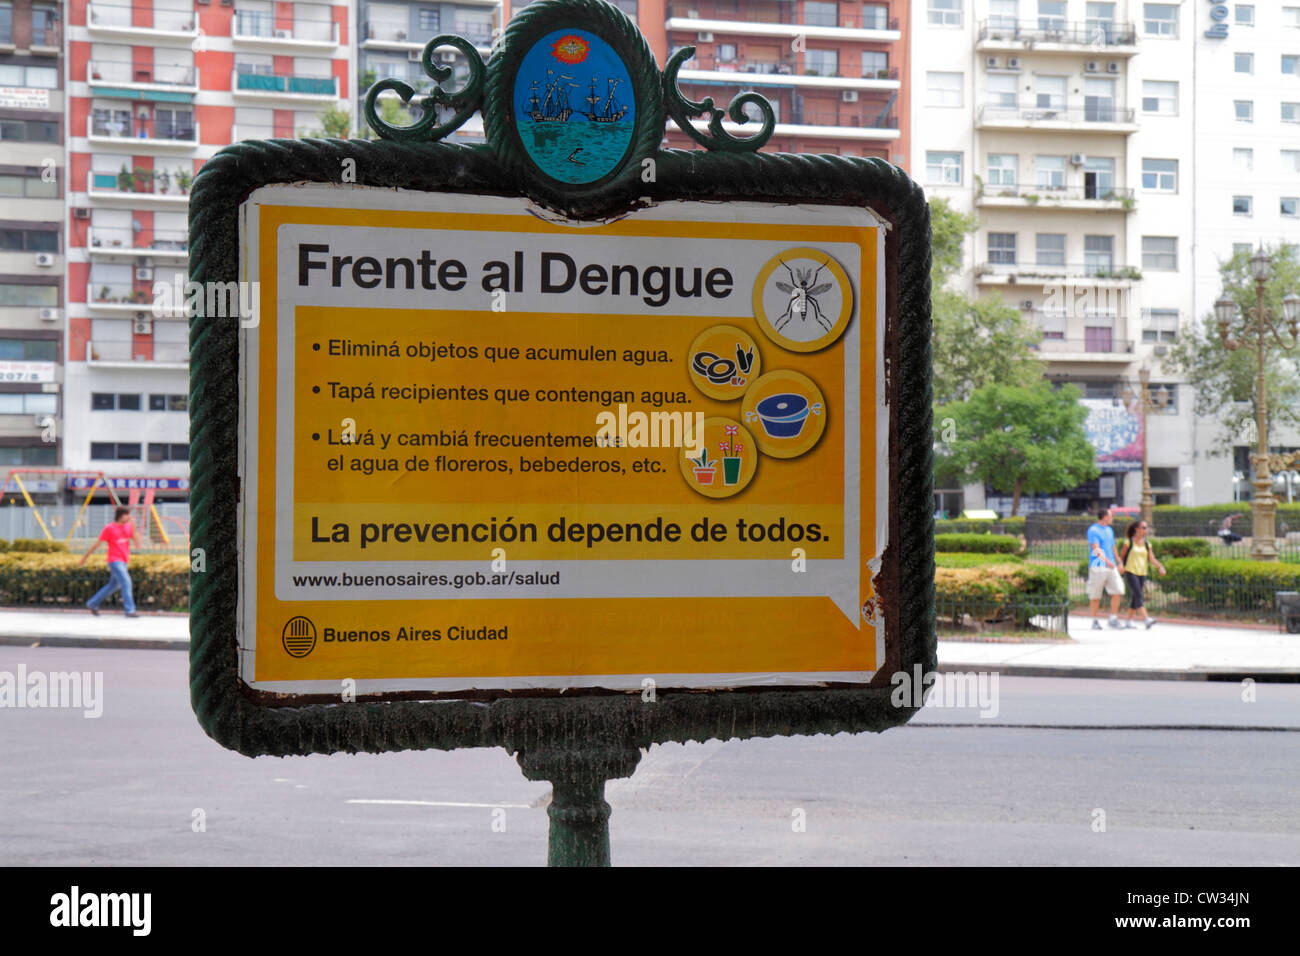 Buenos Aires Argentina,Avenida de Mayo,Plaza Mariano Moreno,street scene,Spanish,language,bilingual,health warning,Dengue Fever,prevention,infectious Stock Photo